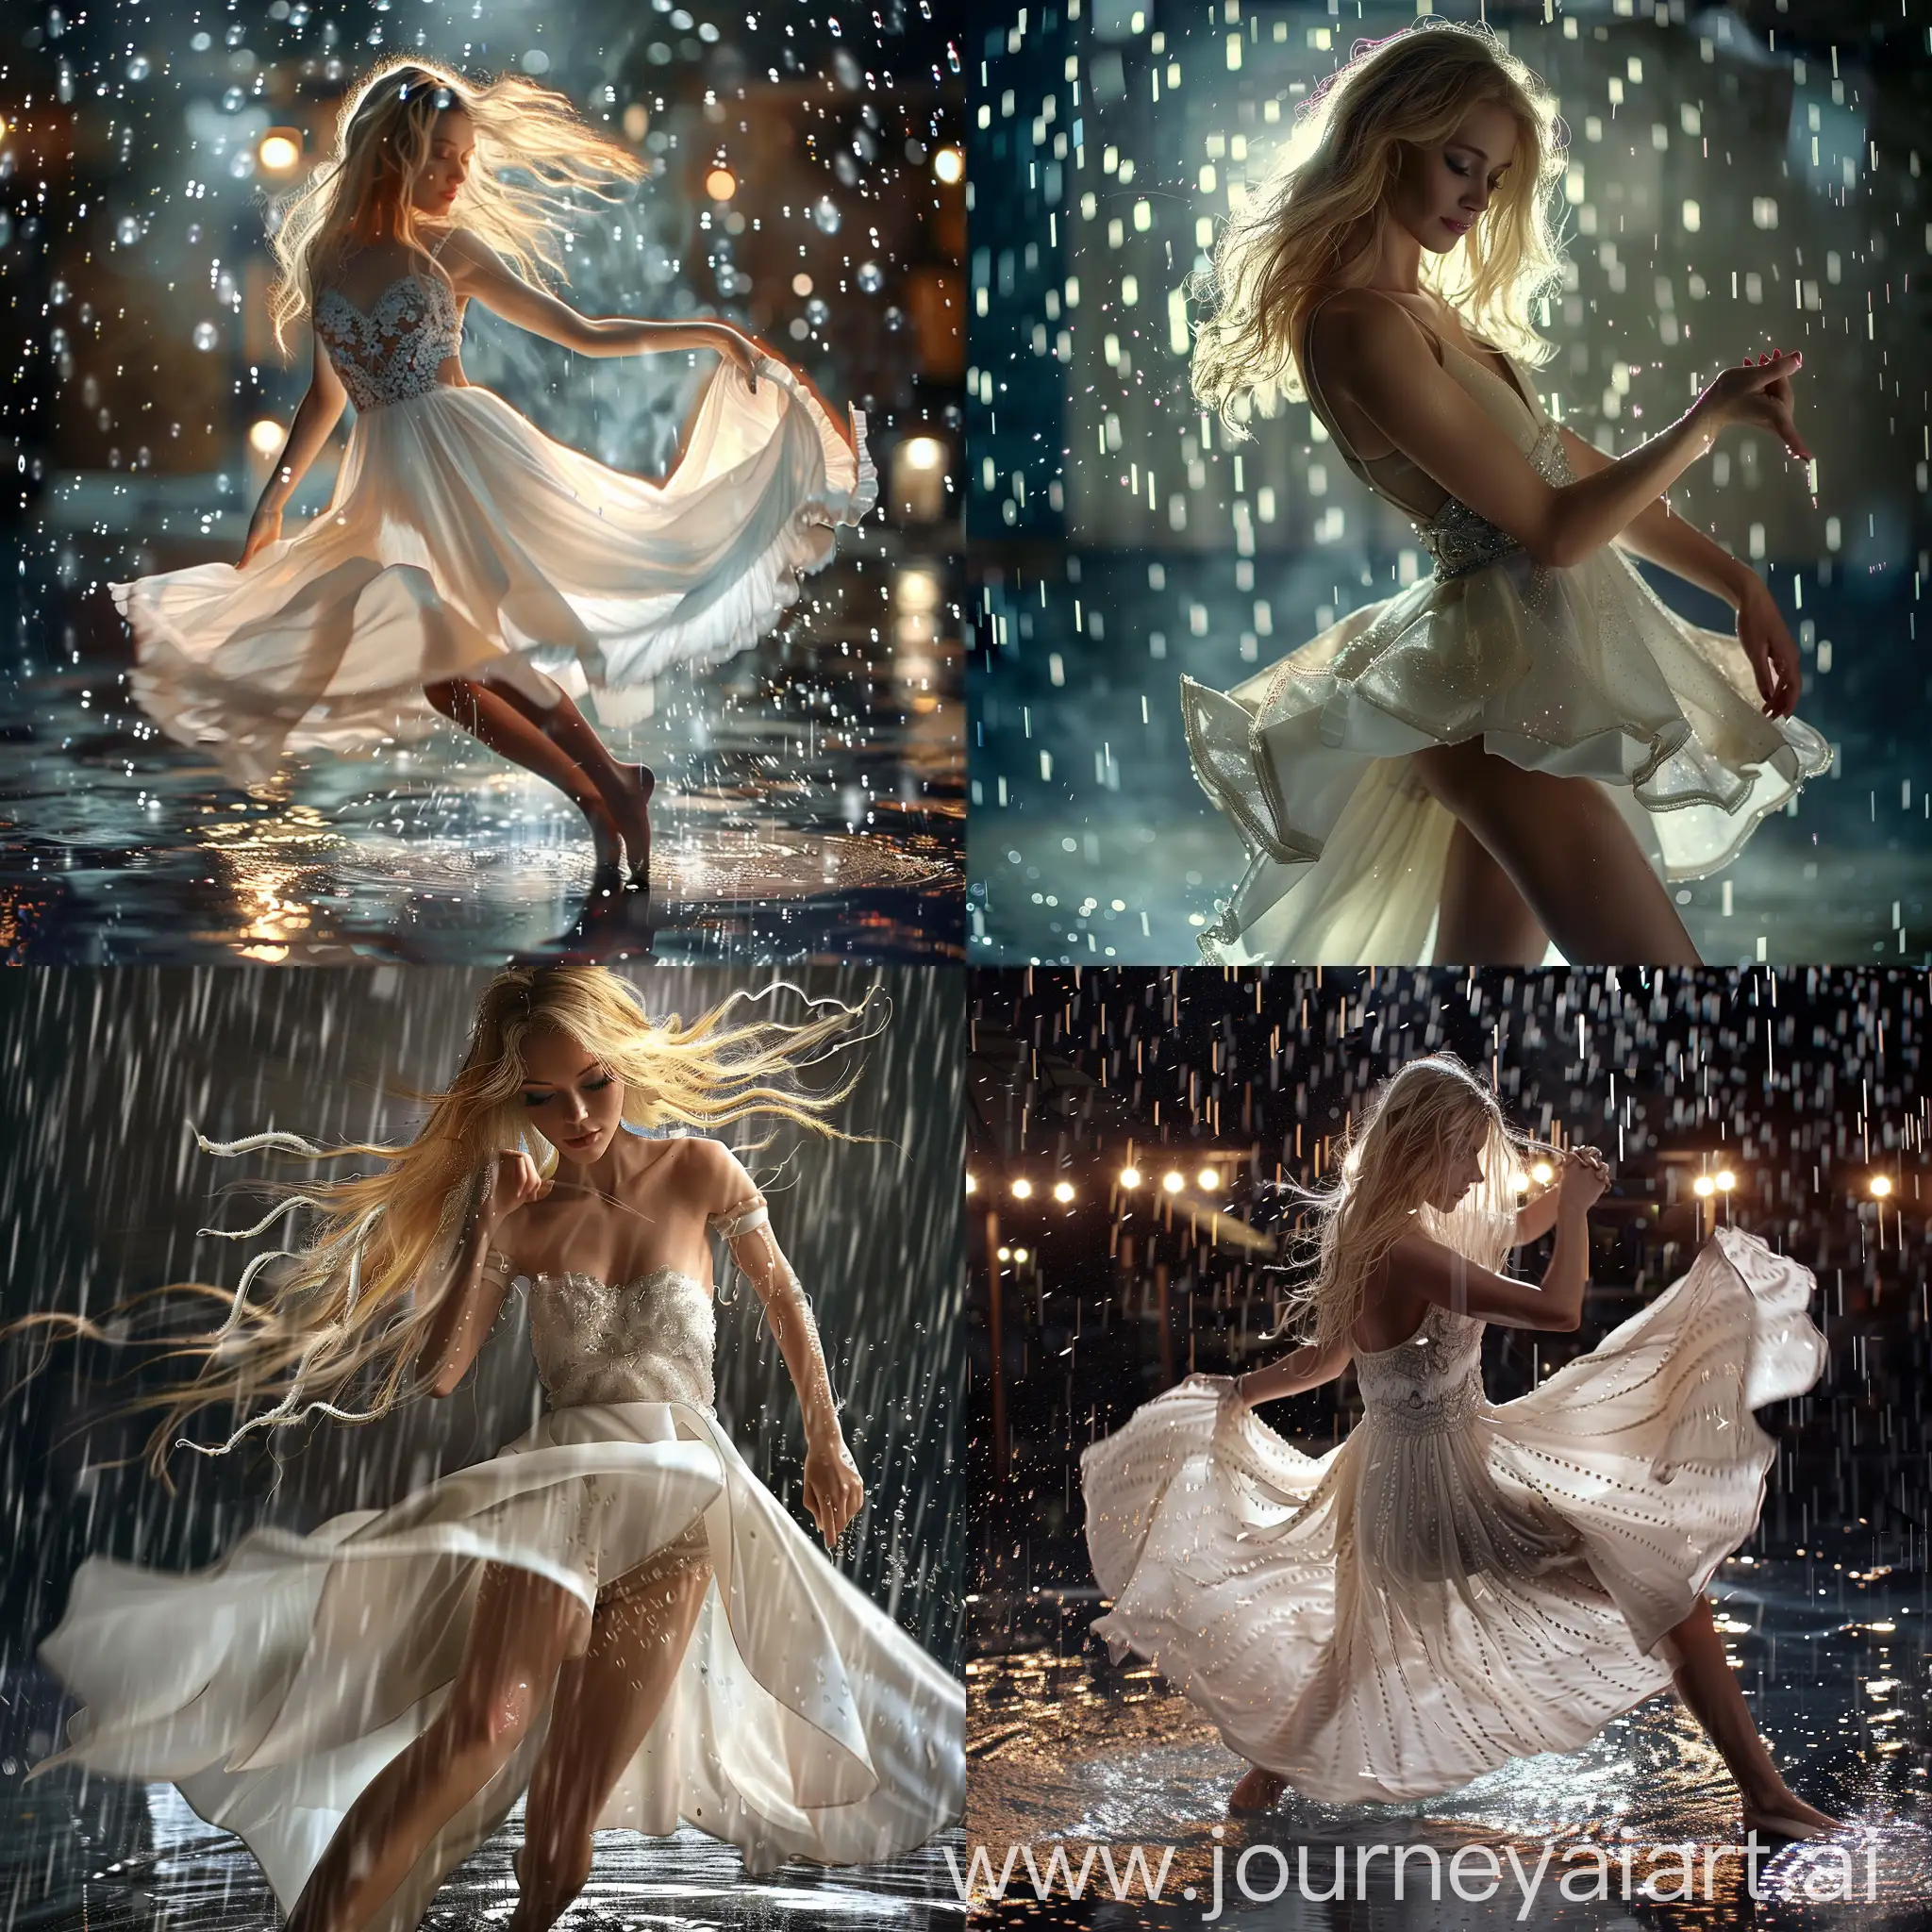 Graceful-Blonde-Girl-Dancing-in-Rain-with-White-Dress-Realistic-Lighting-Art